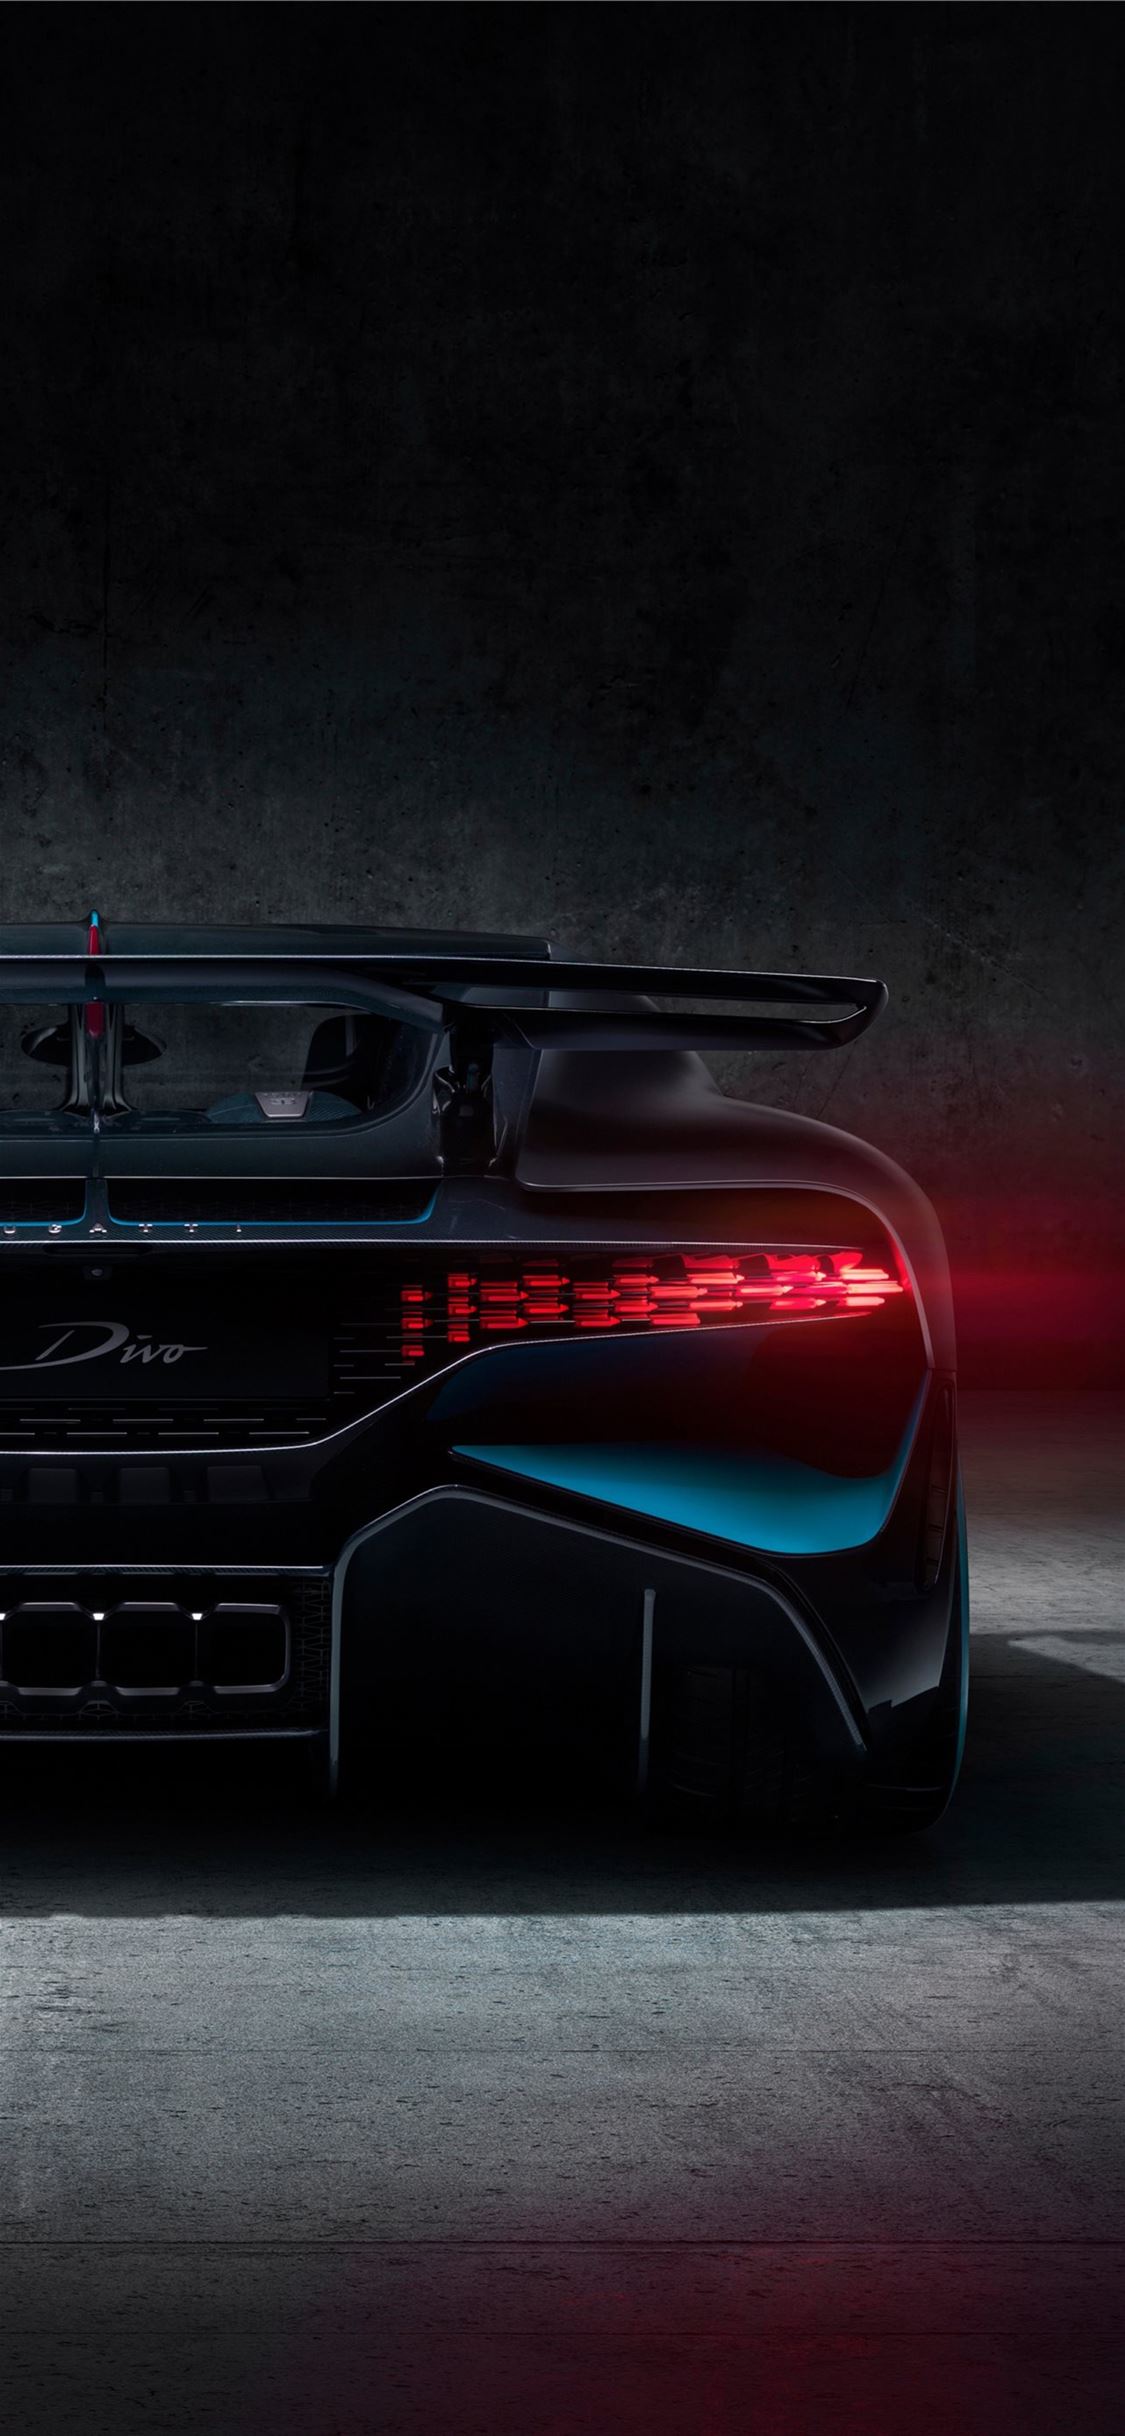 Bugatti Divo 2019 Cars supercar 4K Cars Bikes iPhone Wallpapers Free  Download